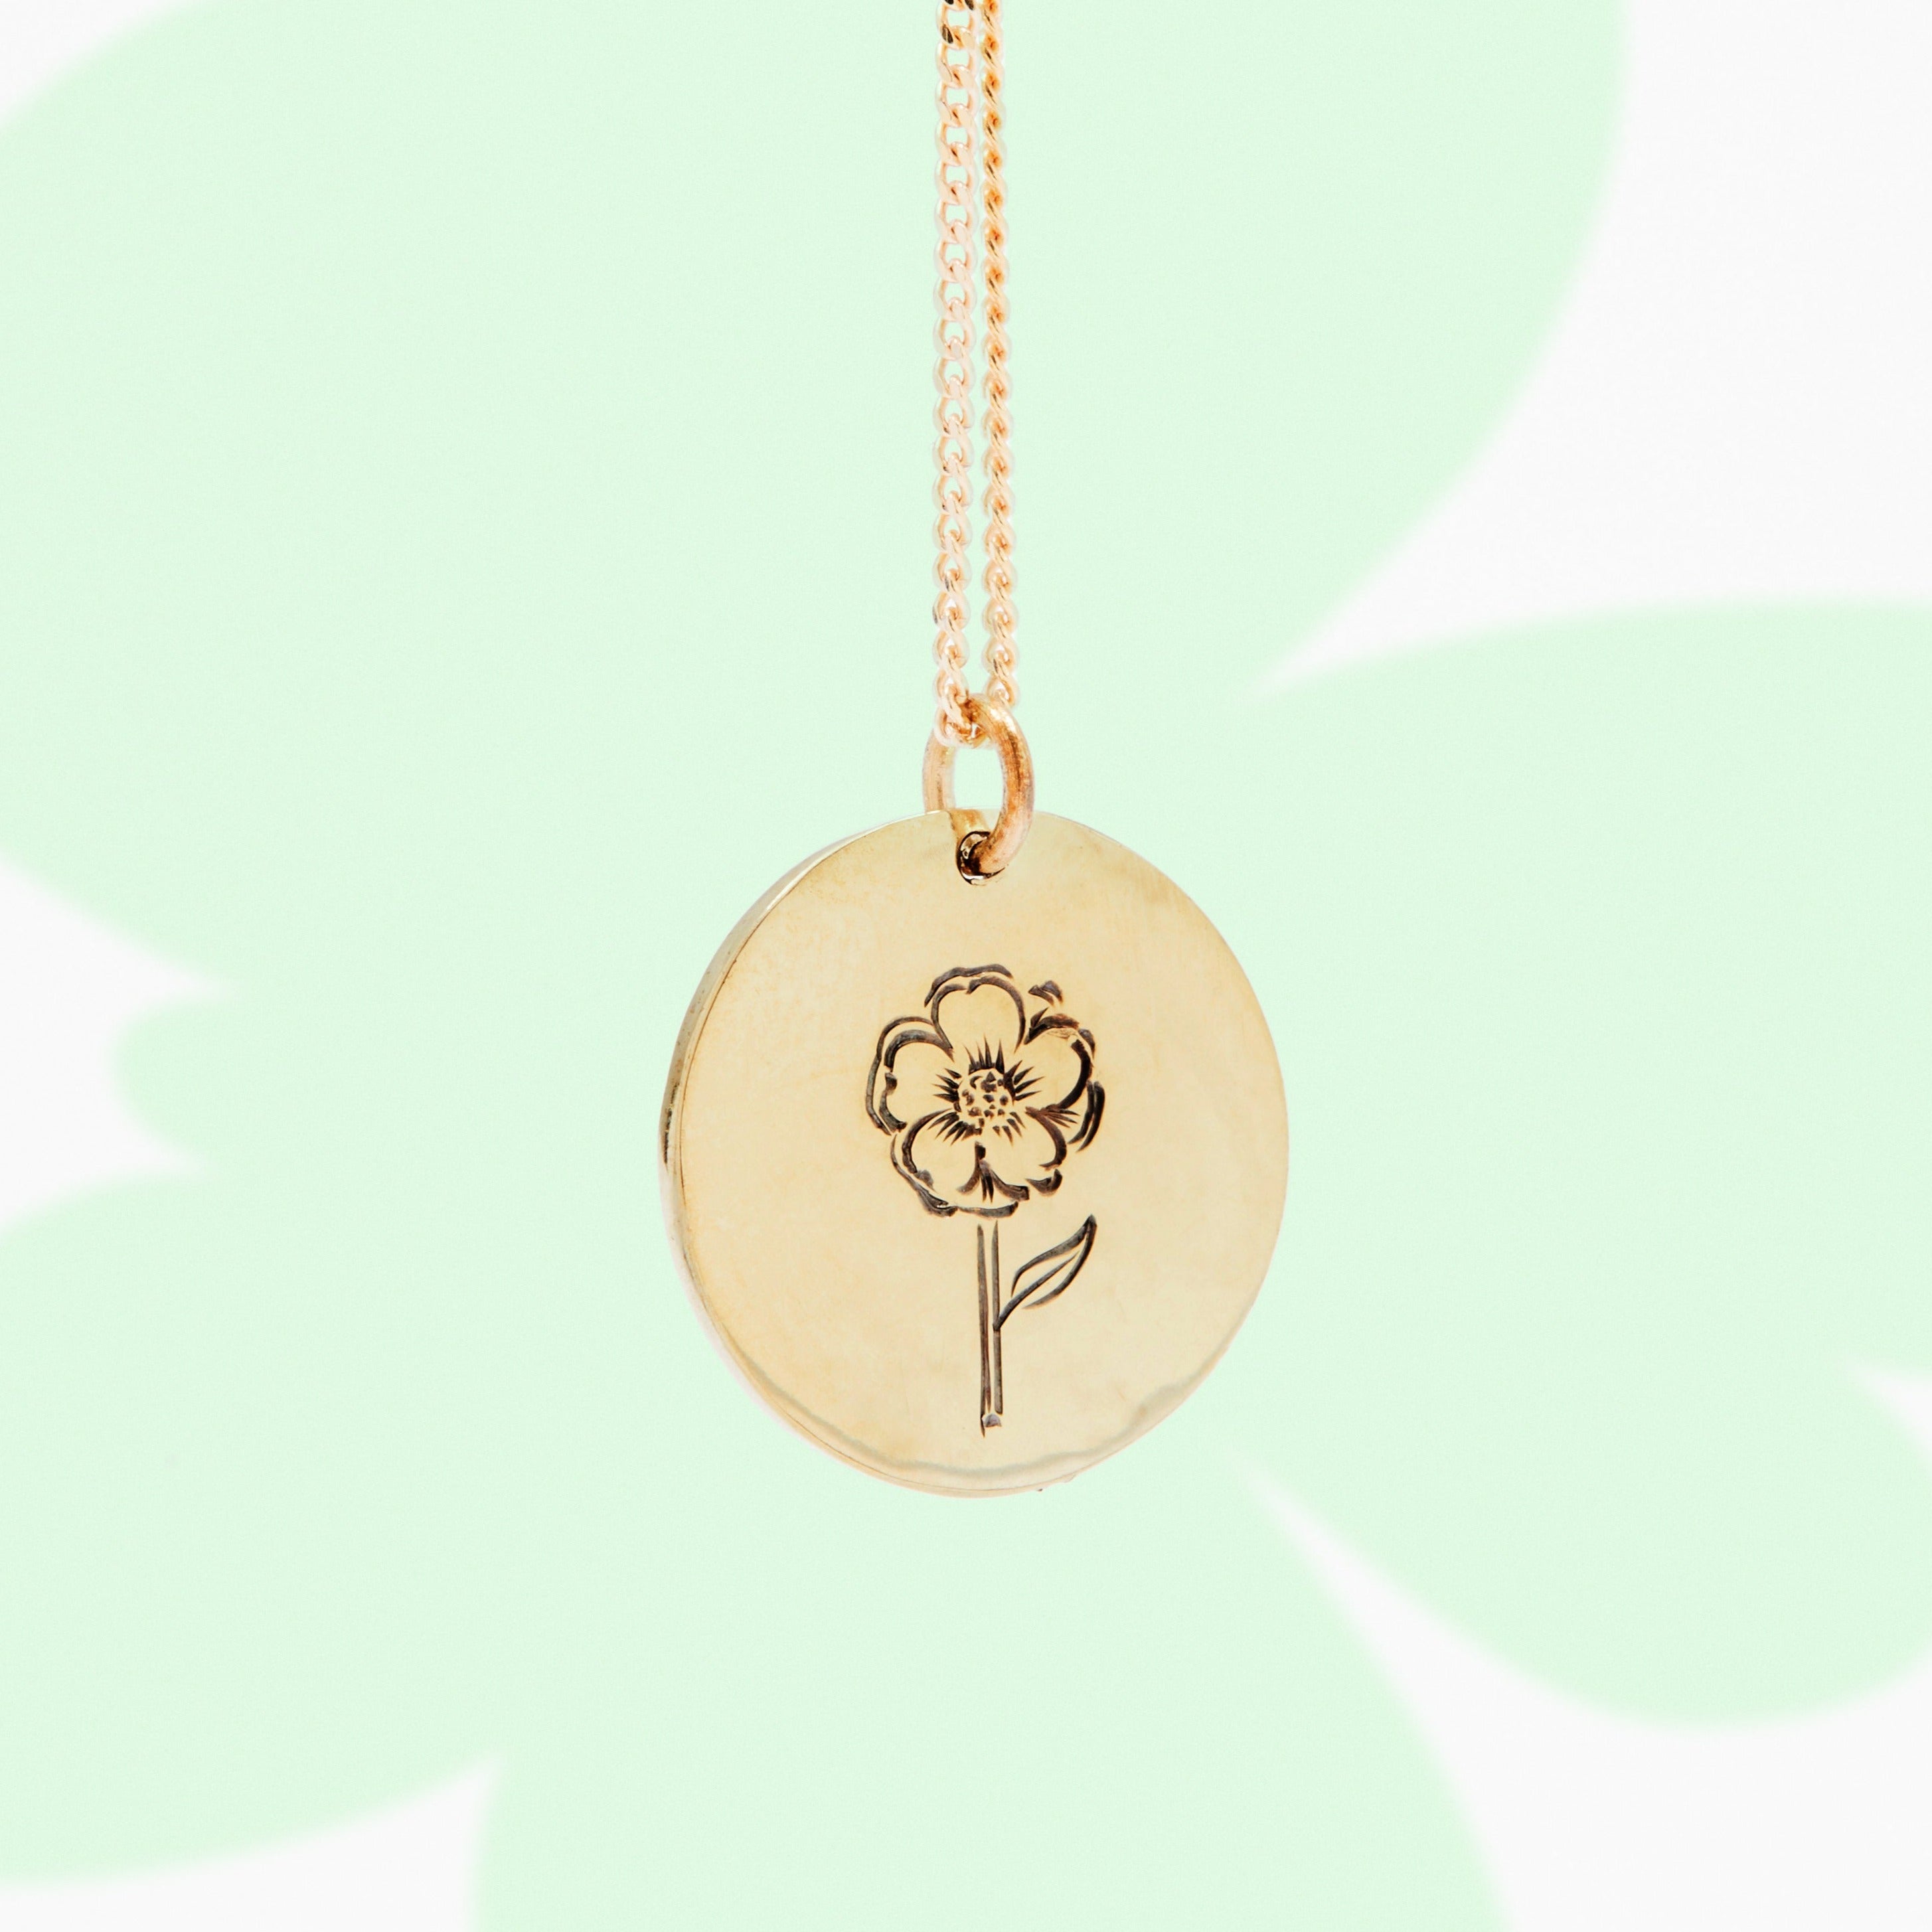 Birth flower bouquet necklace | Birth month necklace gold & silver